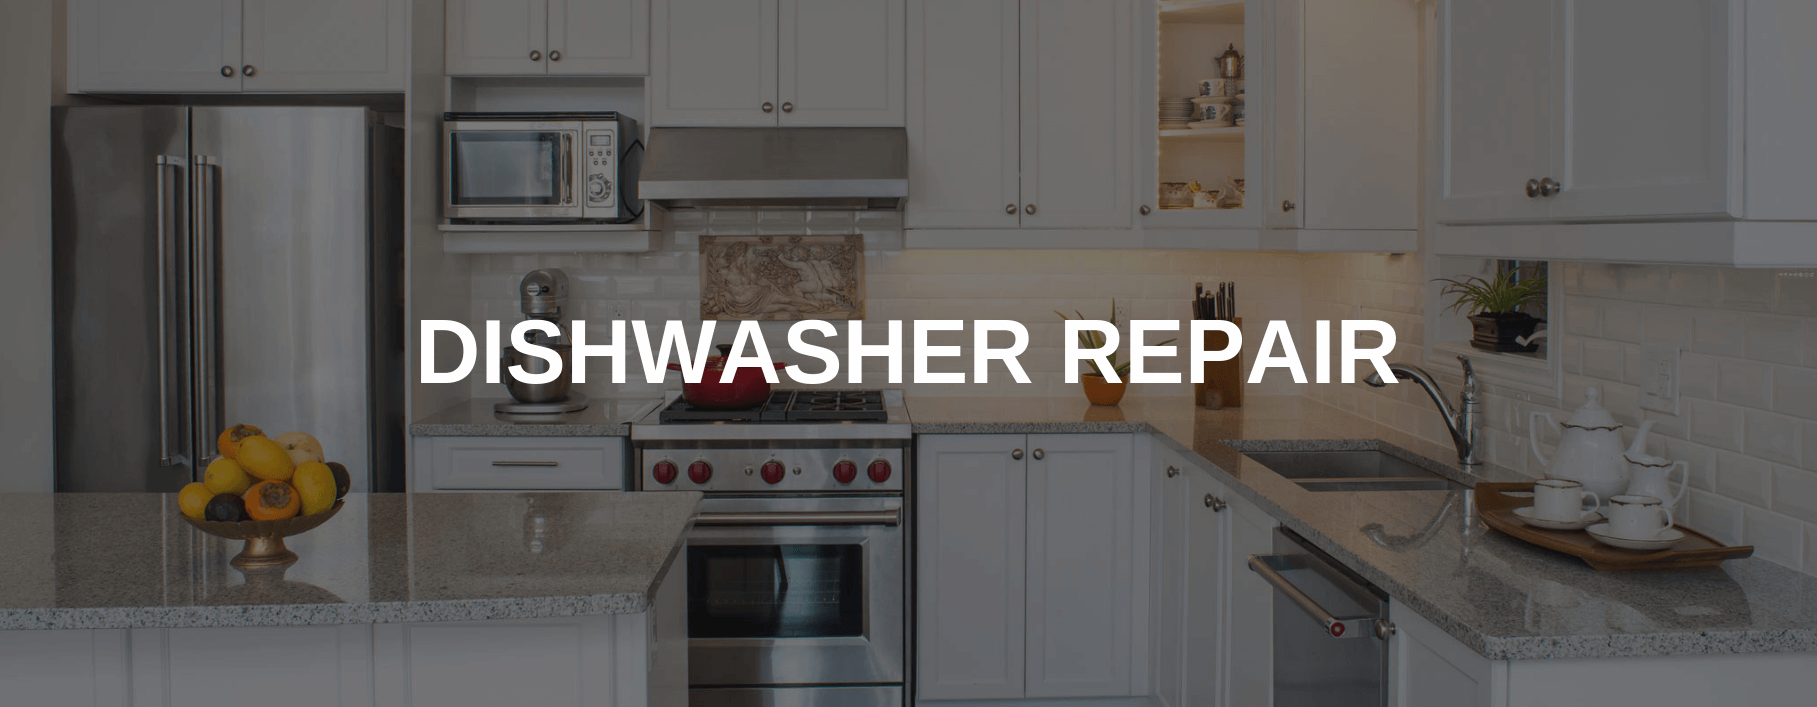 dishwasher repair elizabeth